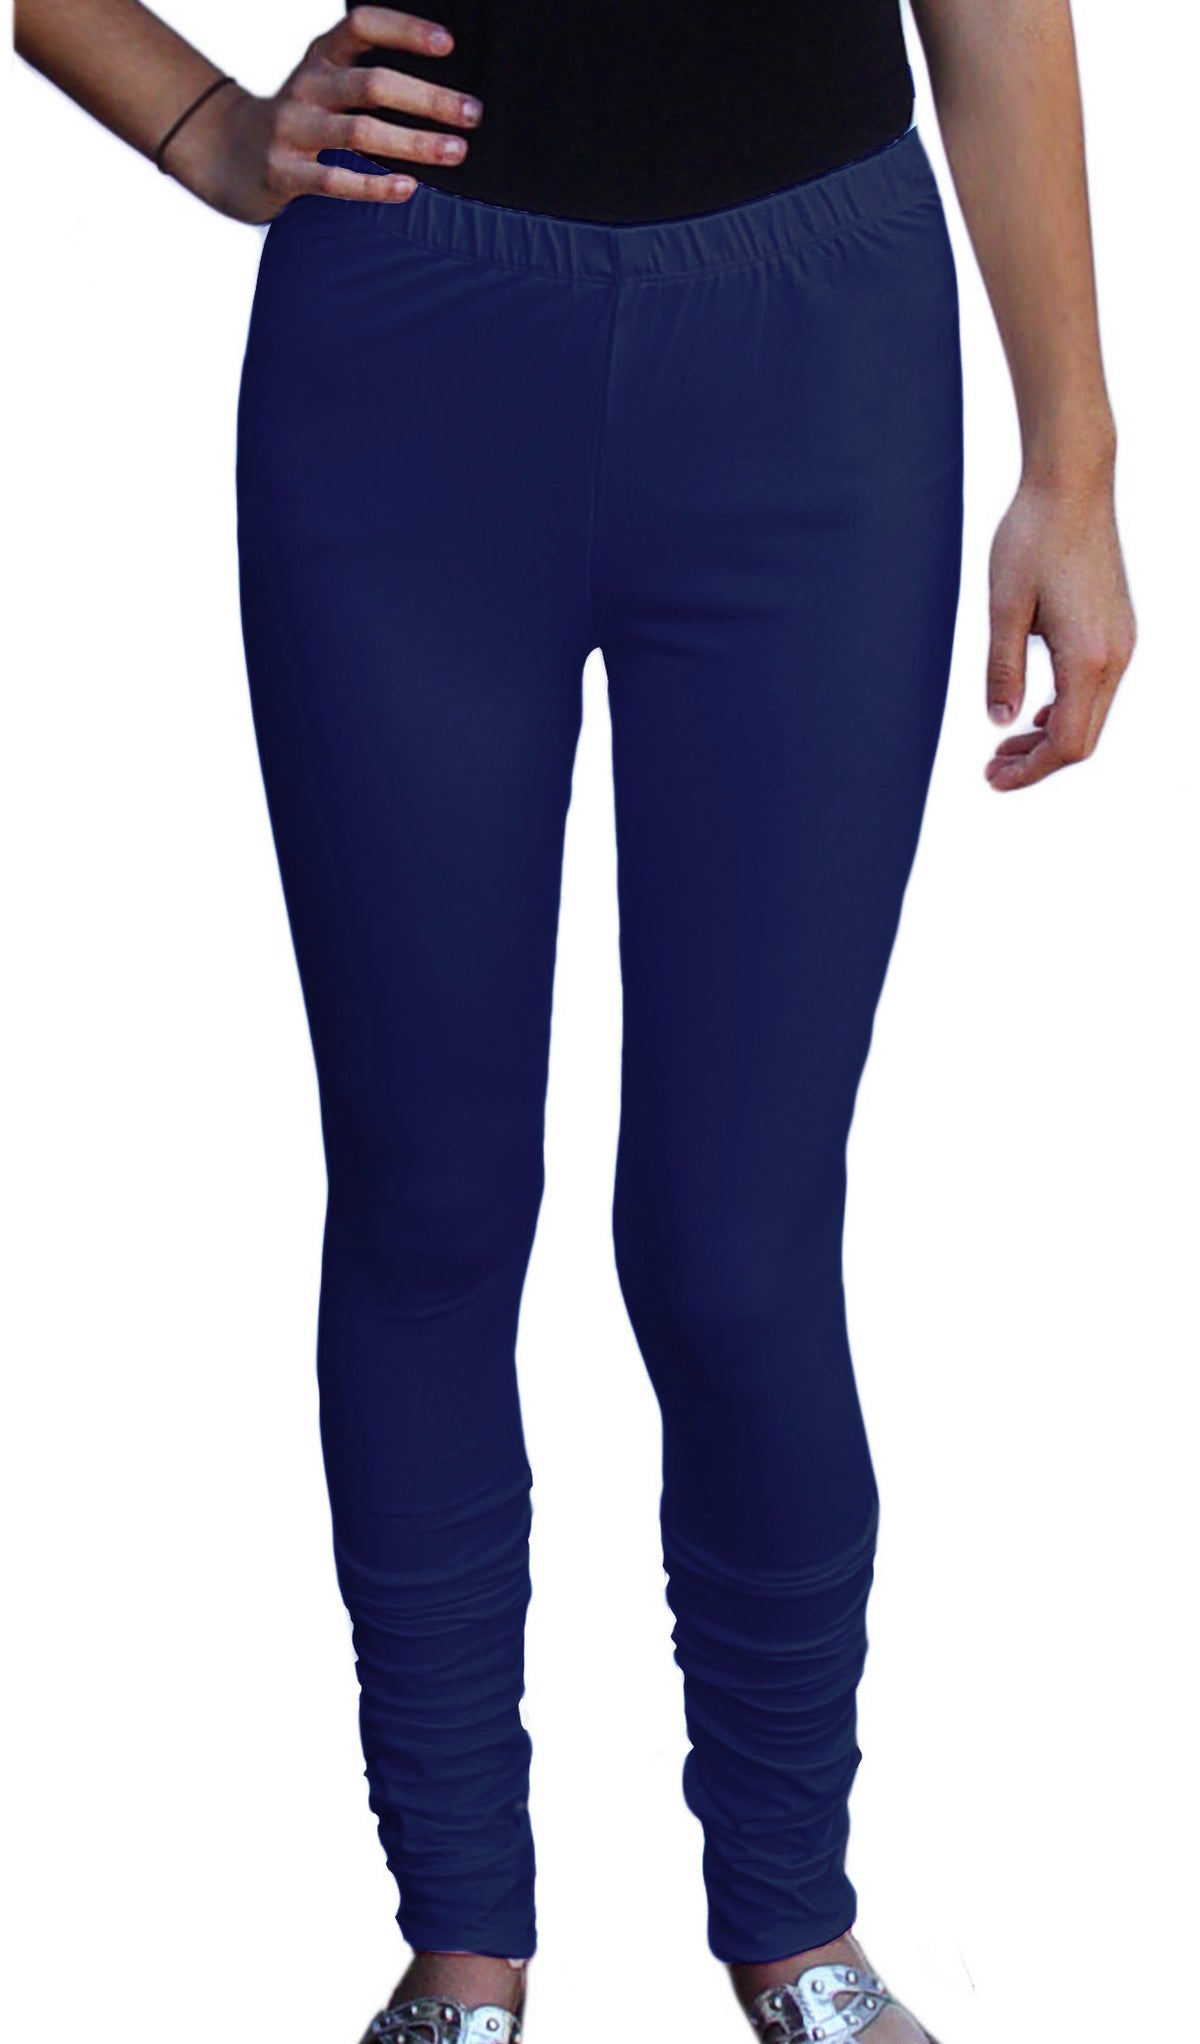 Sofra Cotton Leggings - Womens Medium Weight Breathable Cotton Legging,  Navy, Size: X-Large